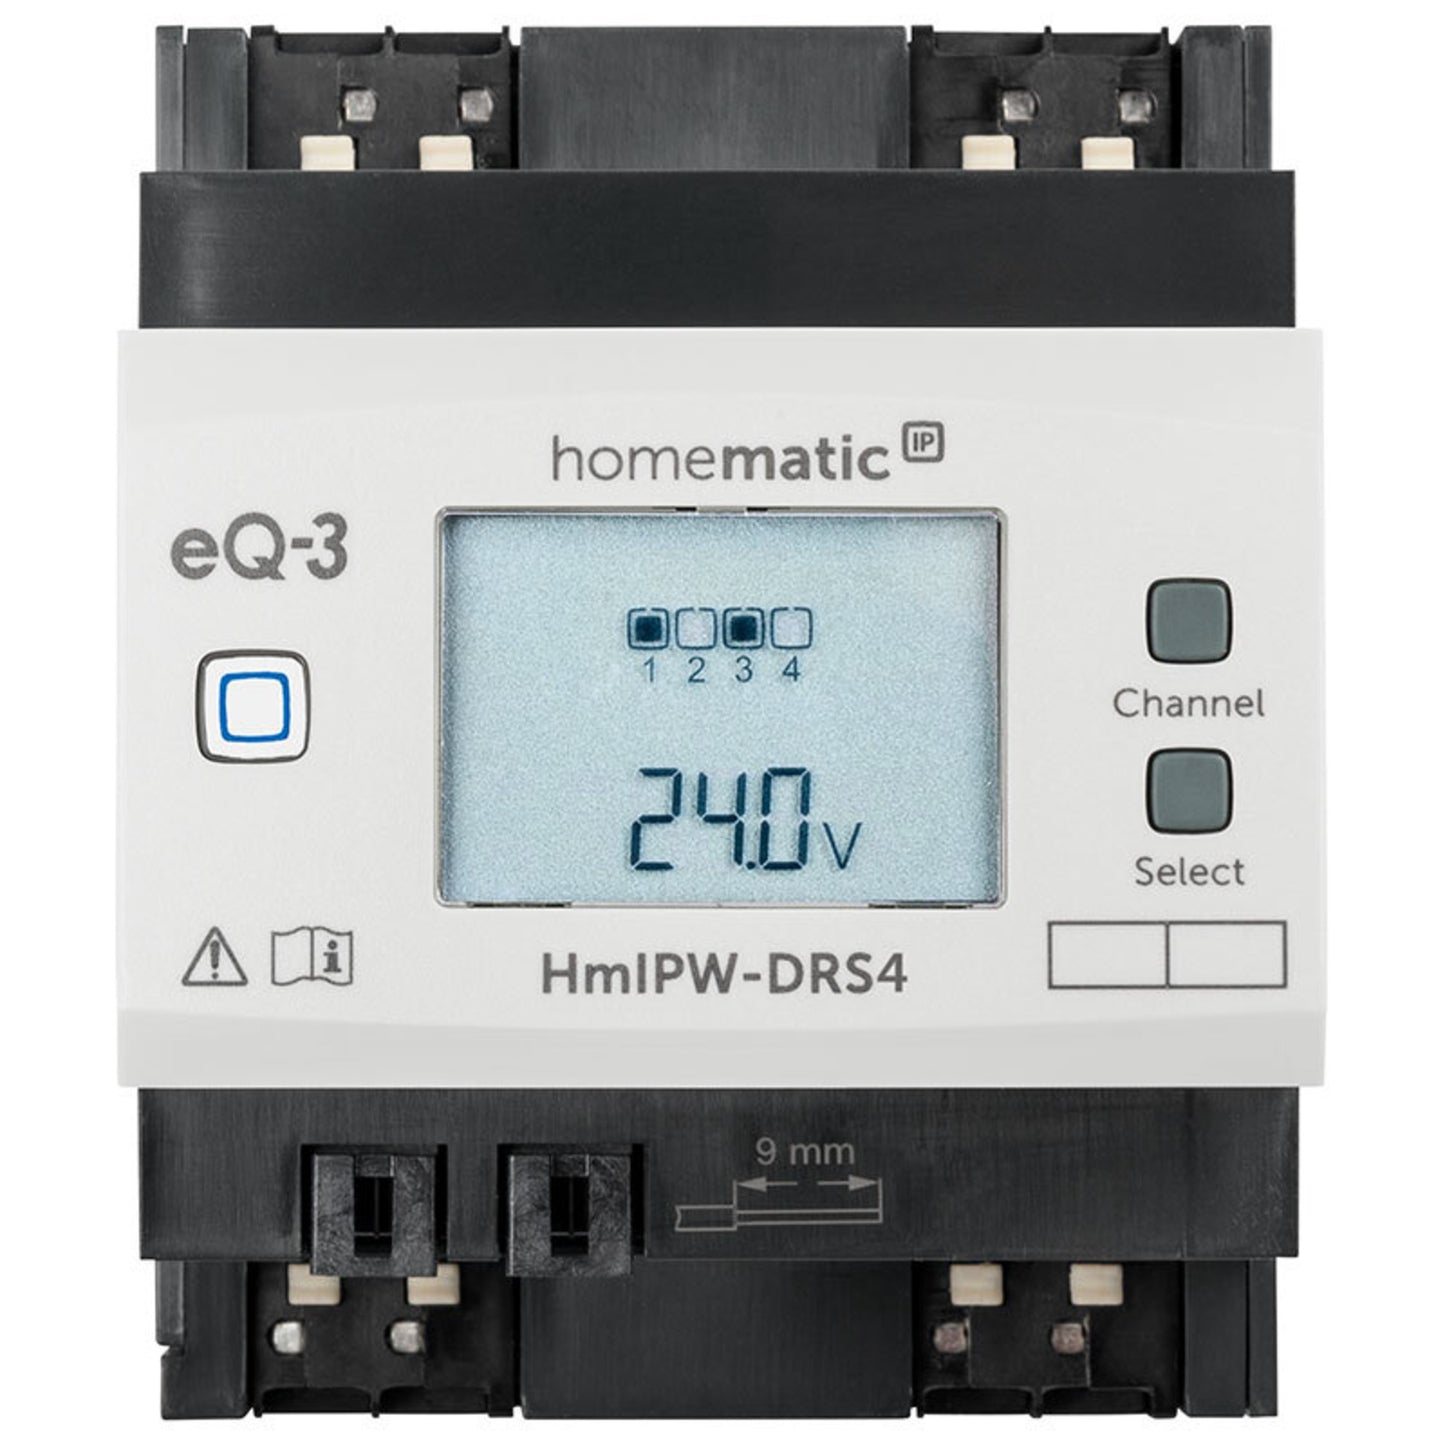 Homematic IP Wired Starter Set Licht 1 x HAP, 1 x DRAP, 1 x Netzteil, 8 x BRC2, 2 x DRS4